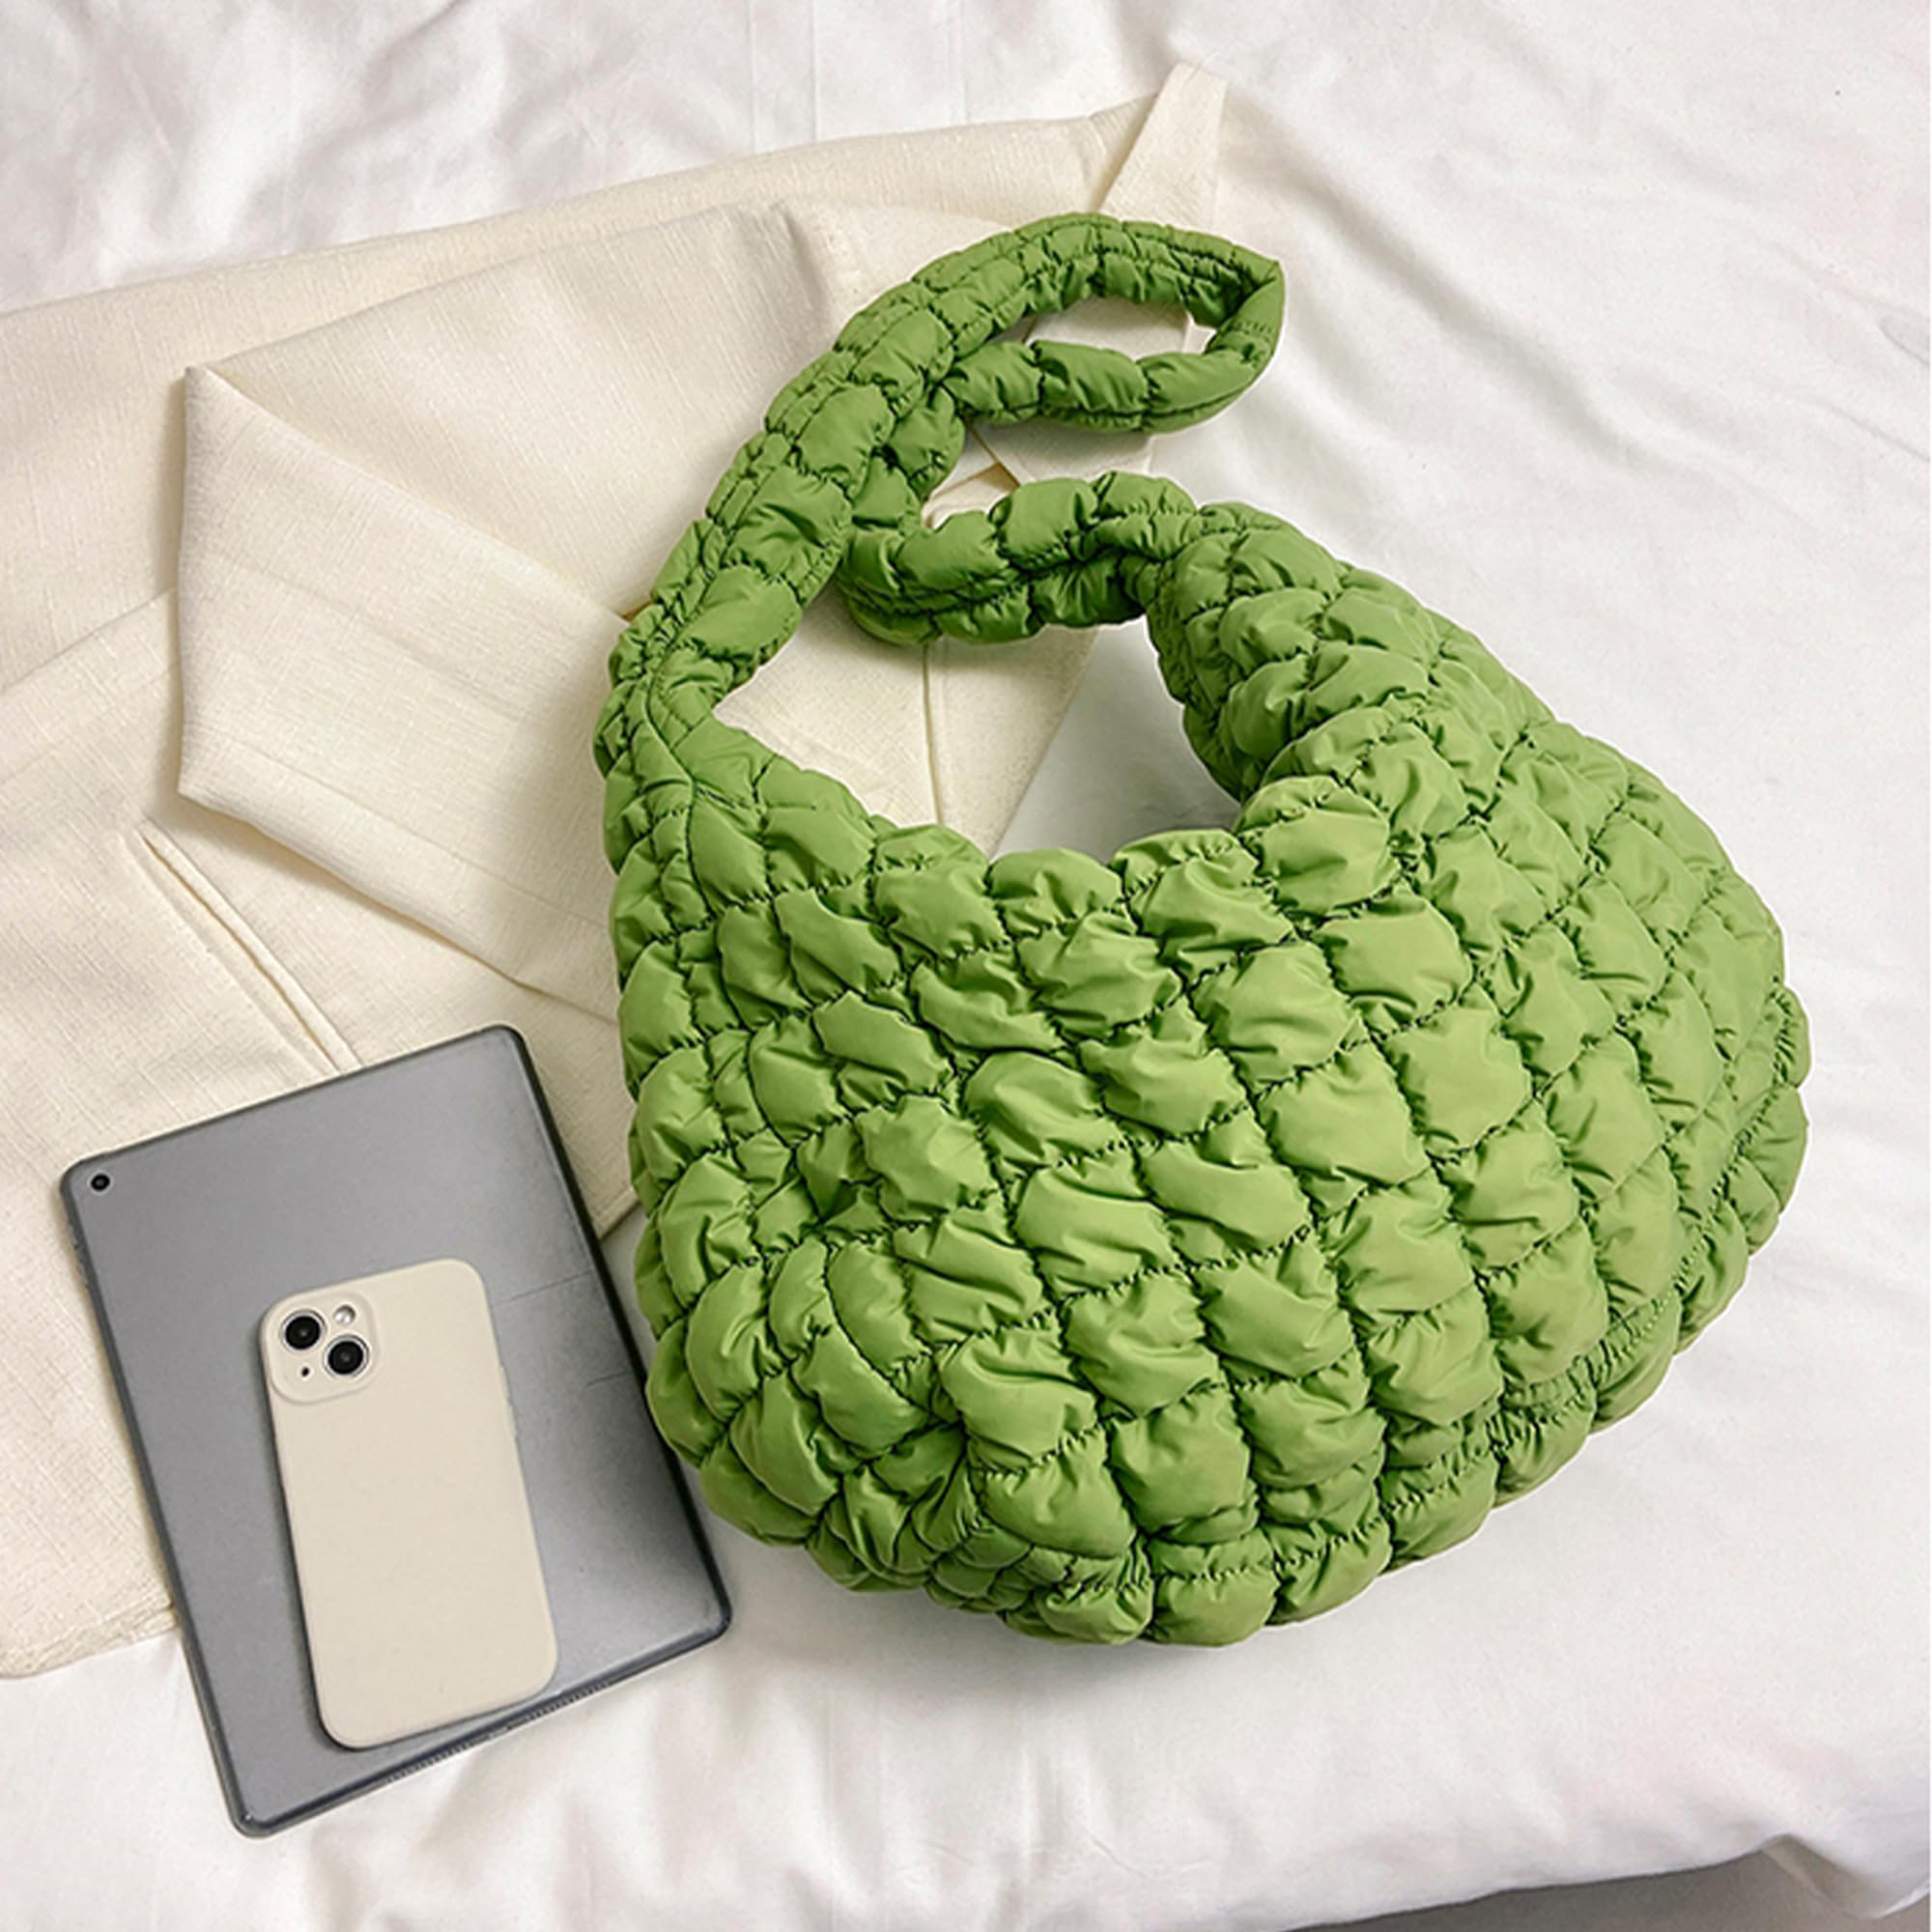 Quilted Tote Bag for Women Padded Shoulder Bag Large Hobo Purse Lightweight Nylon Padding Handbag